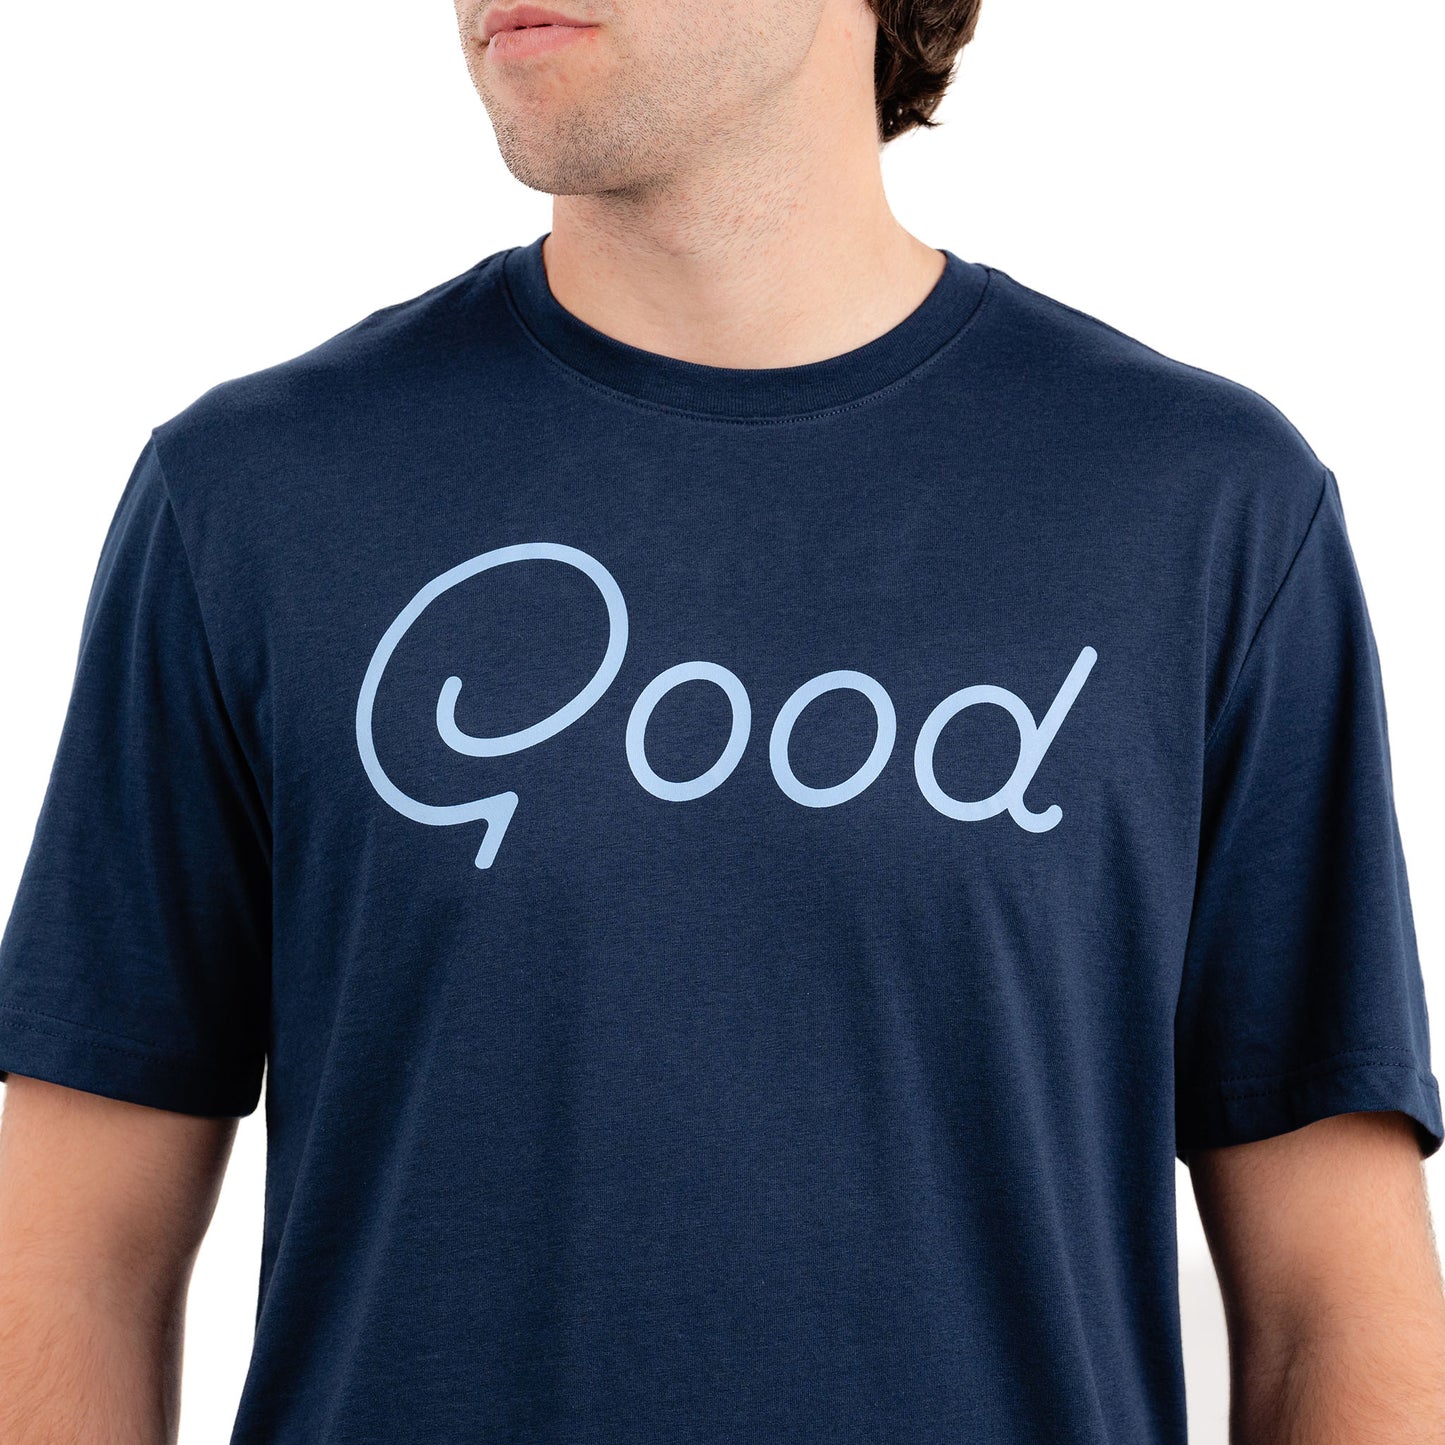 Good Navy T-Shirt